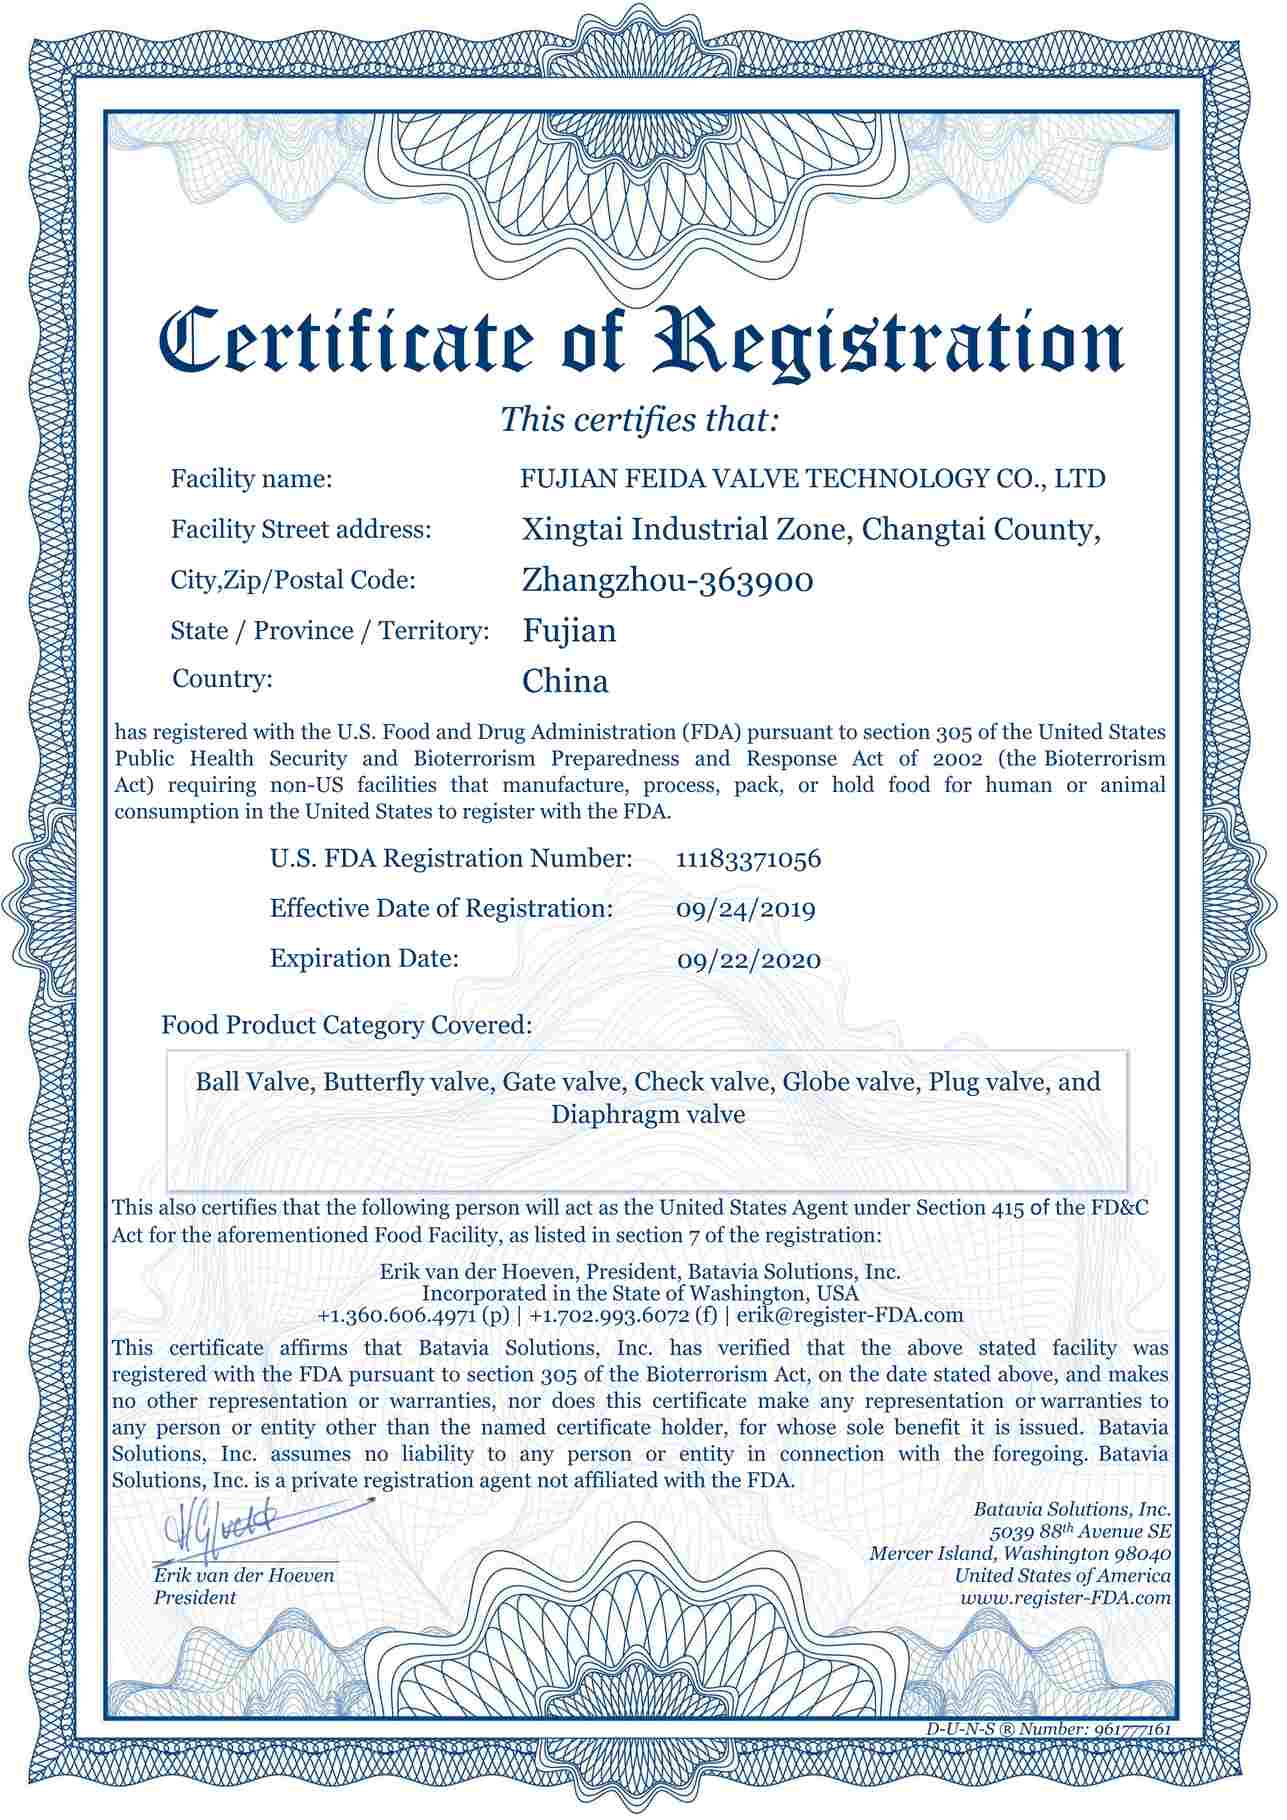 U.S Food and Drug Adminstration(FDA) Certificate